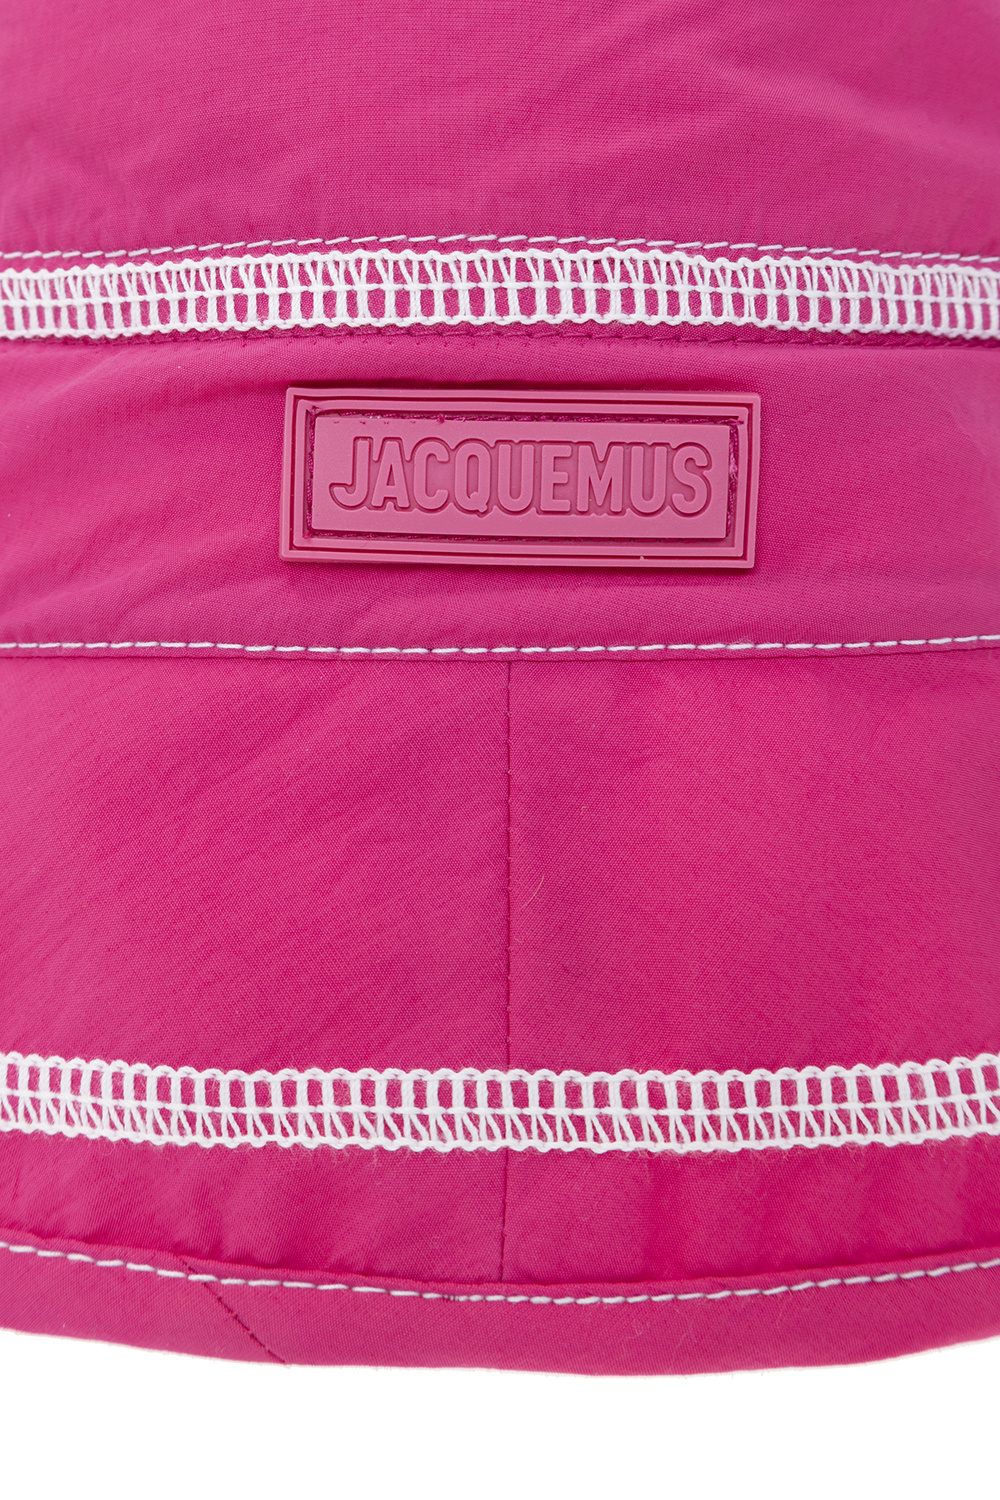 Jacquemus men caps women footwear-accessories box Shirts